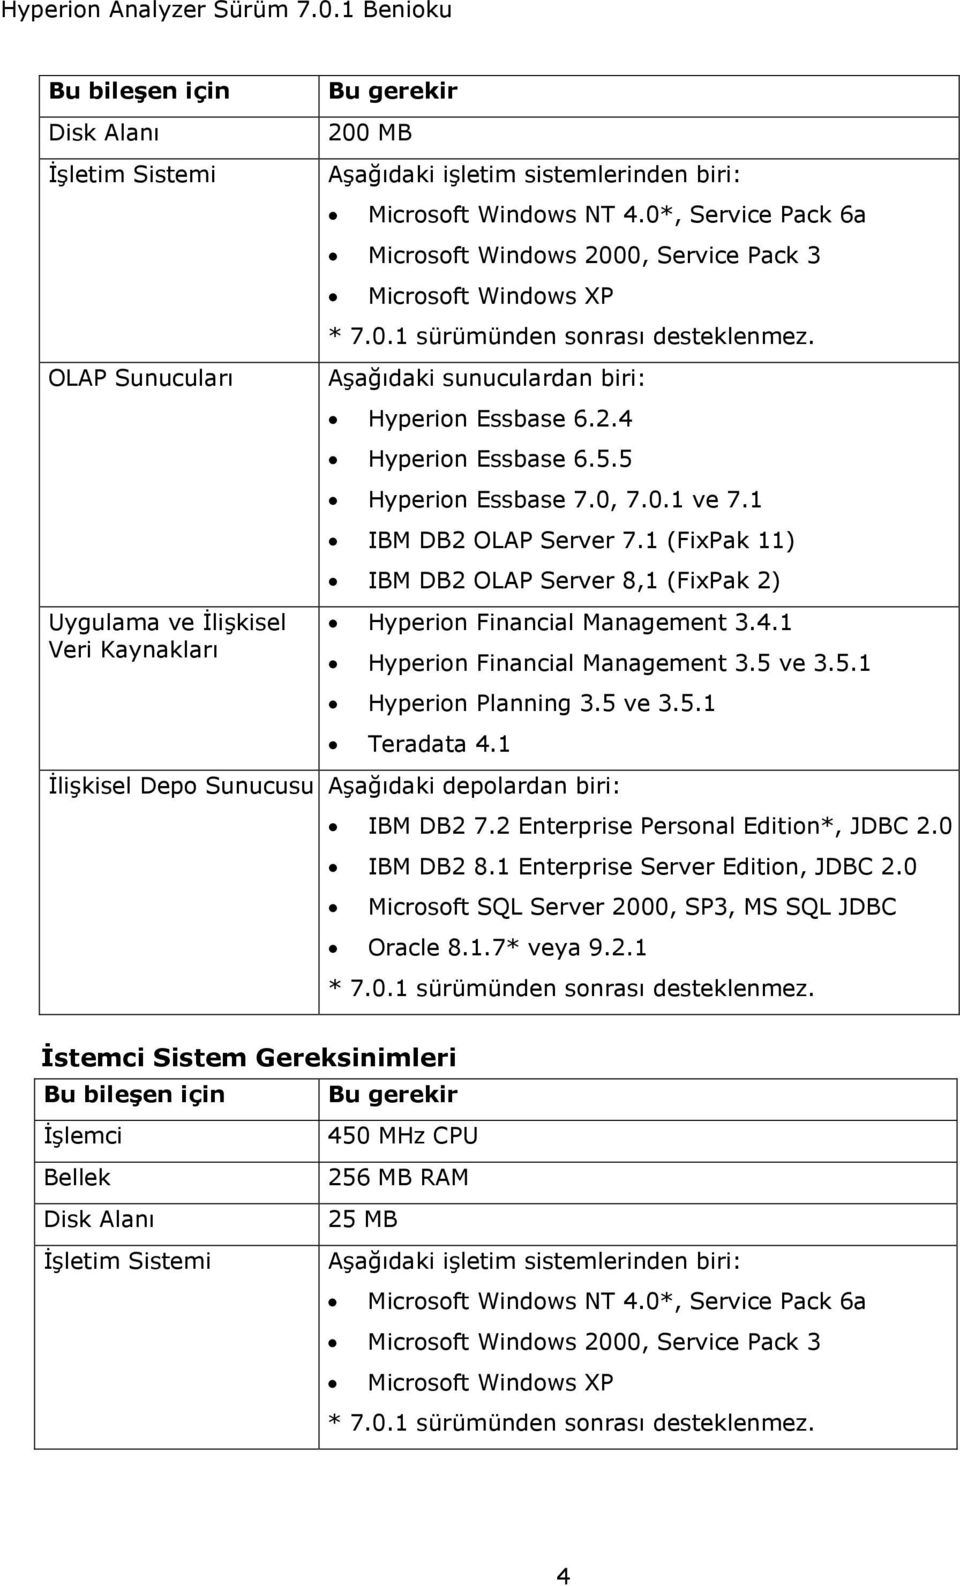 5 Hyperion Essbase 7.0, 7.0.1 ve 7.1 IBM DB2 OLAP Server 7.1 (FixPak 11) IBM DB2 OLAP Server 8,1 (FixPak 2) Hyperion Financial Management 3.4.1 Hyperion Financial Management 3.5 ve 3.5.1 Hyperion Planning 3.